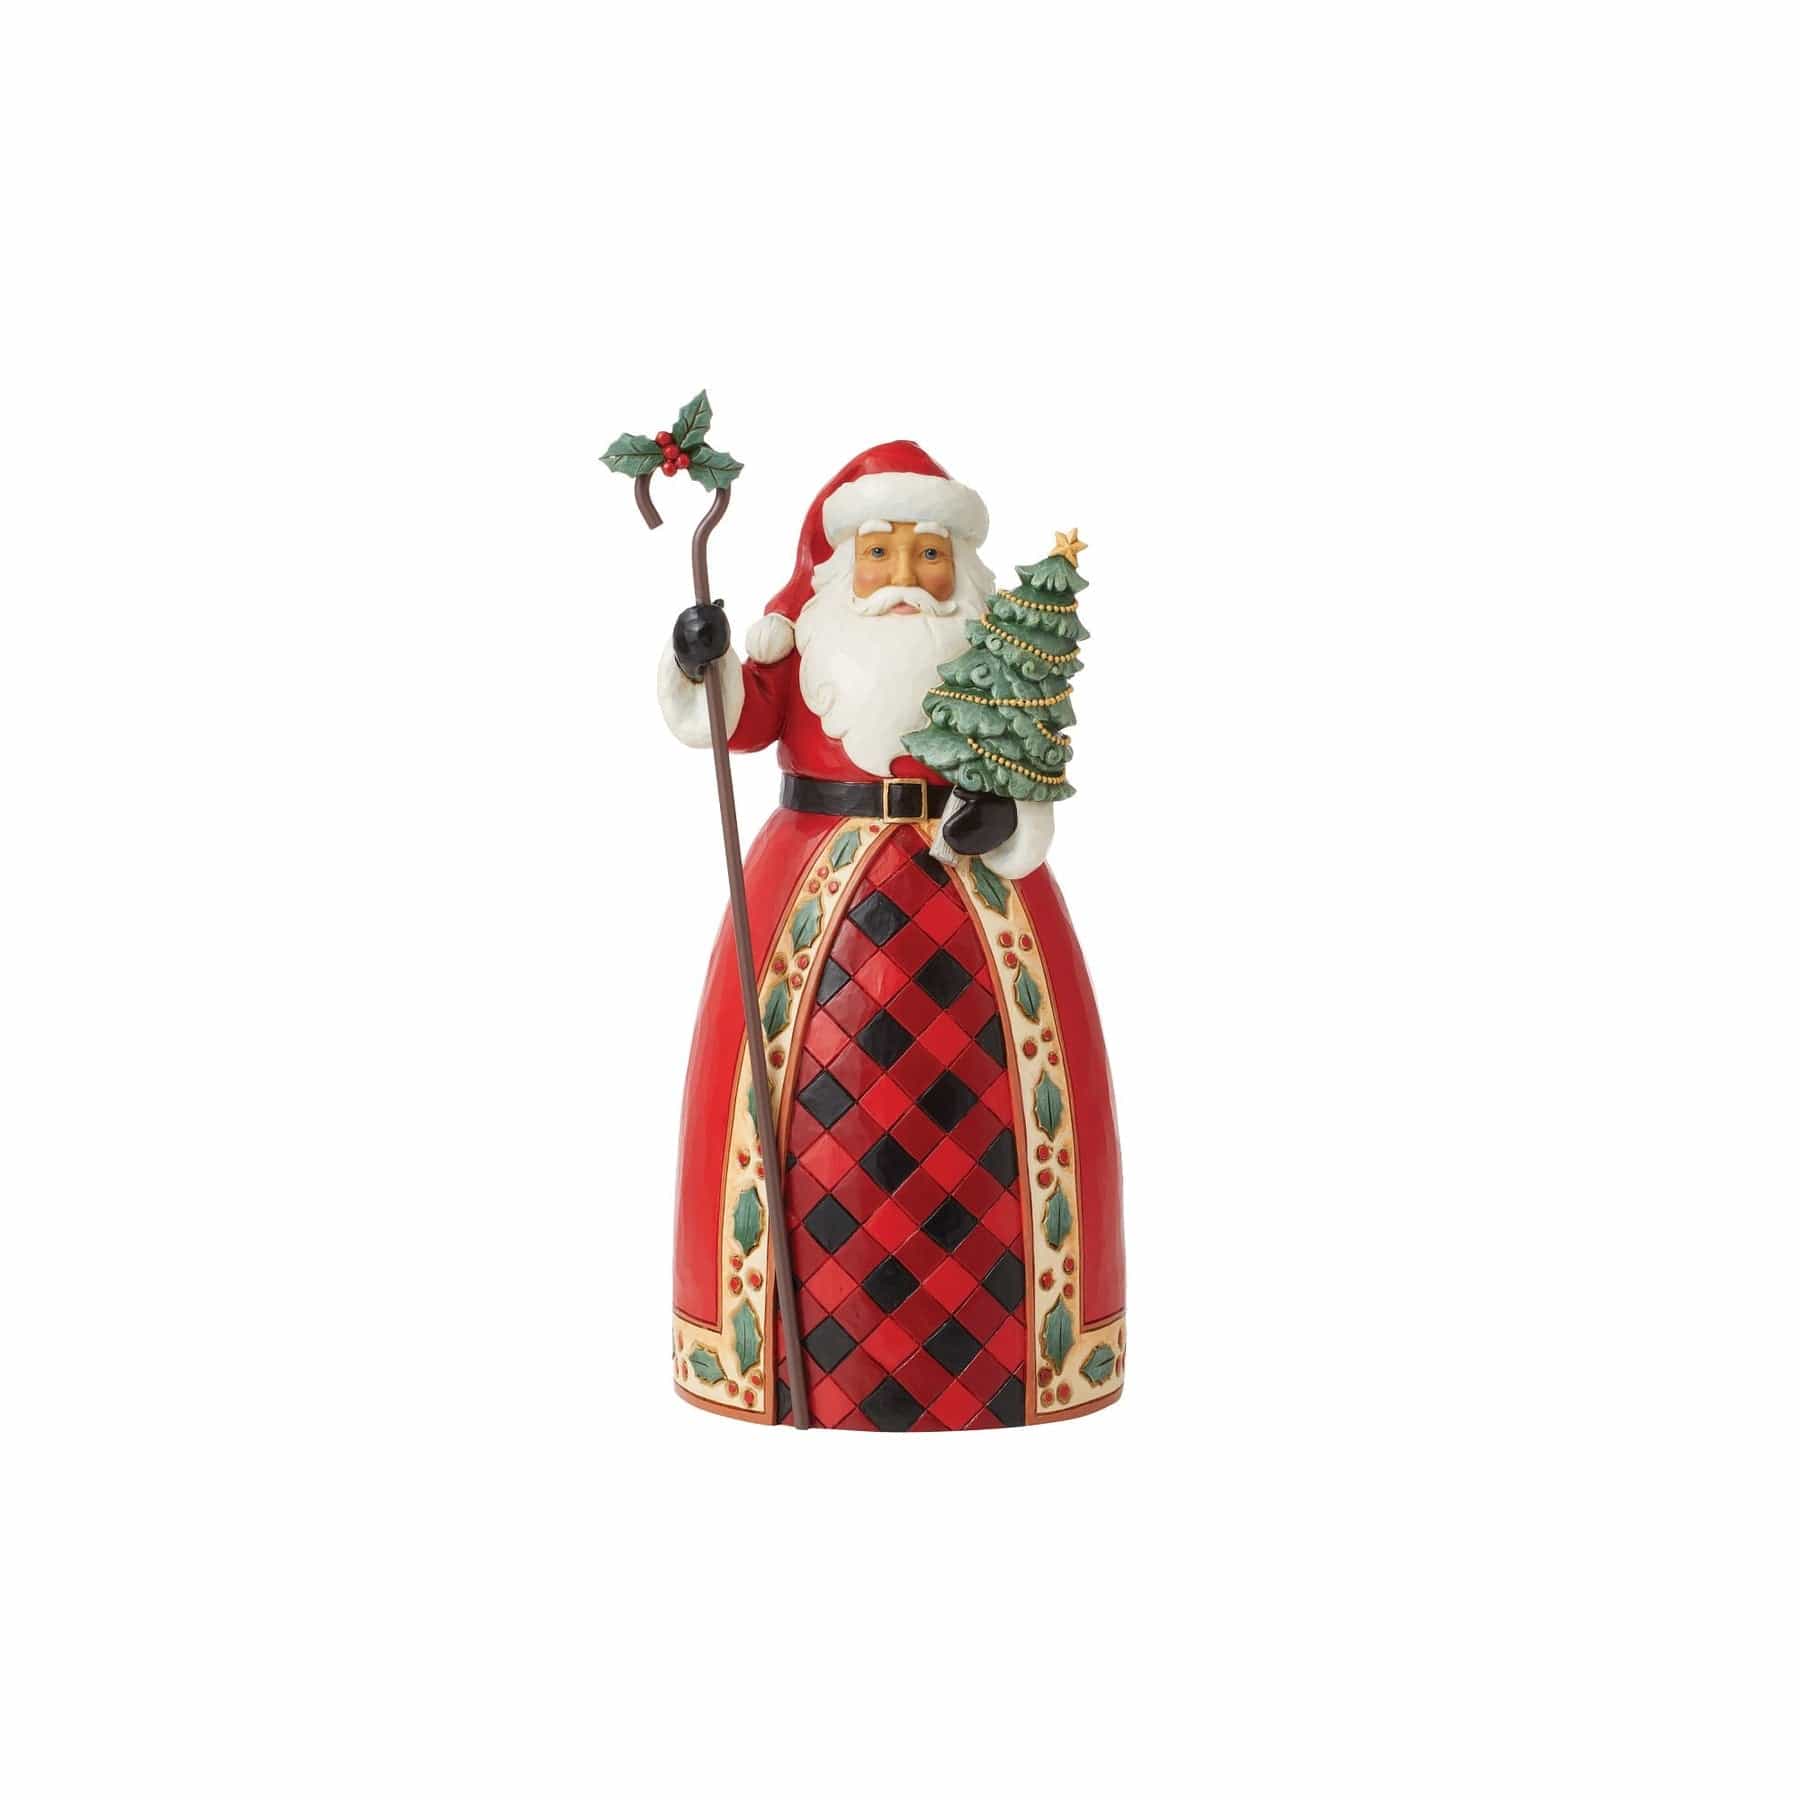 Jim Shore Figurine Jim Shore - Highland Glen Santa - Christmas Traditions Figurine